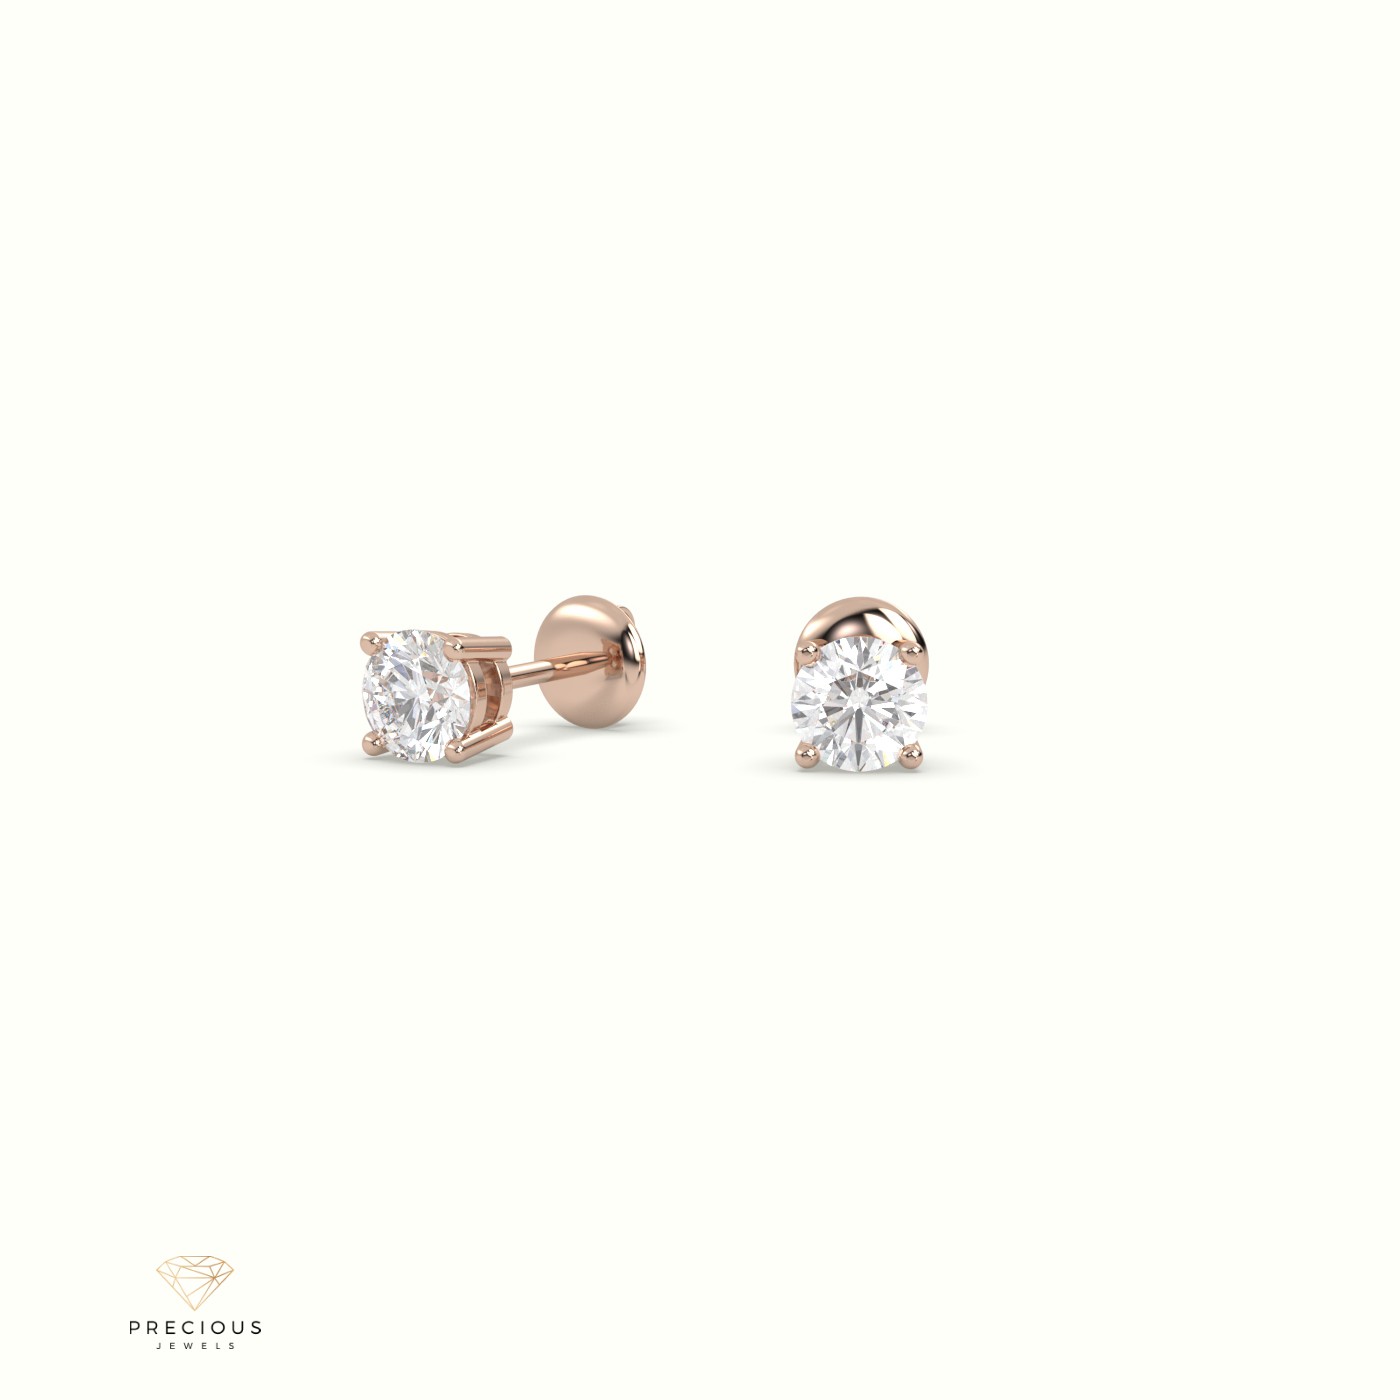 18k rose gold  4 prongs classic round diamond earring studs